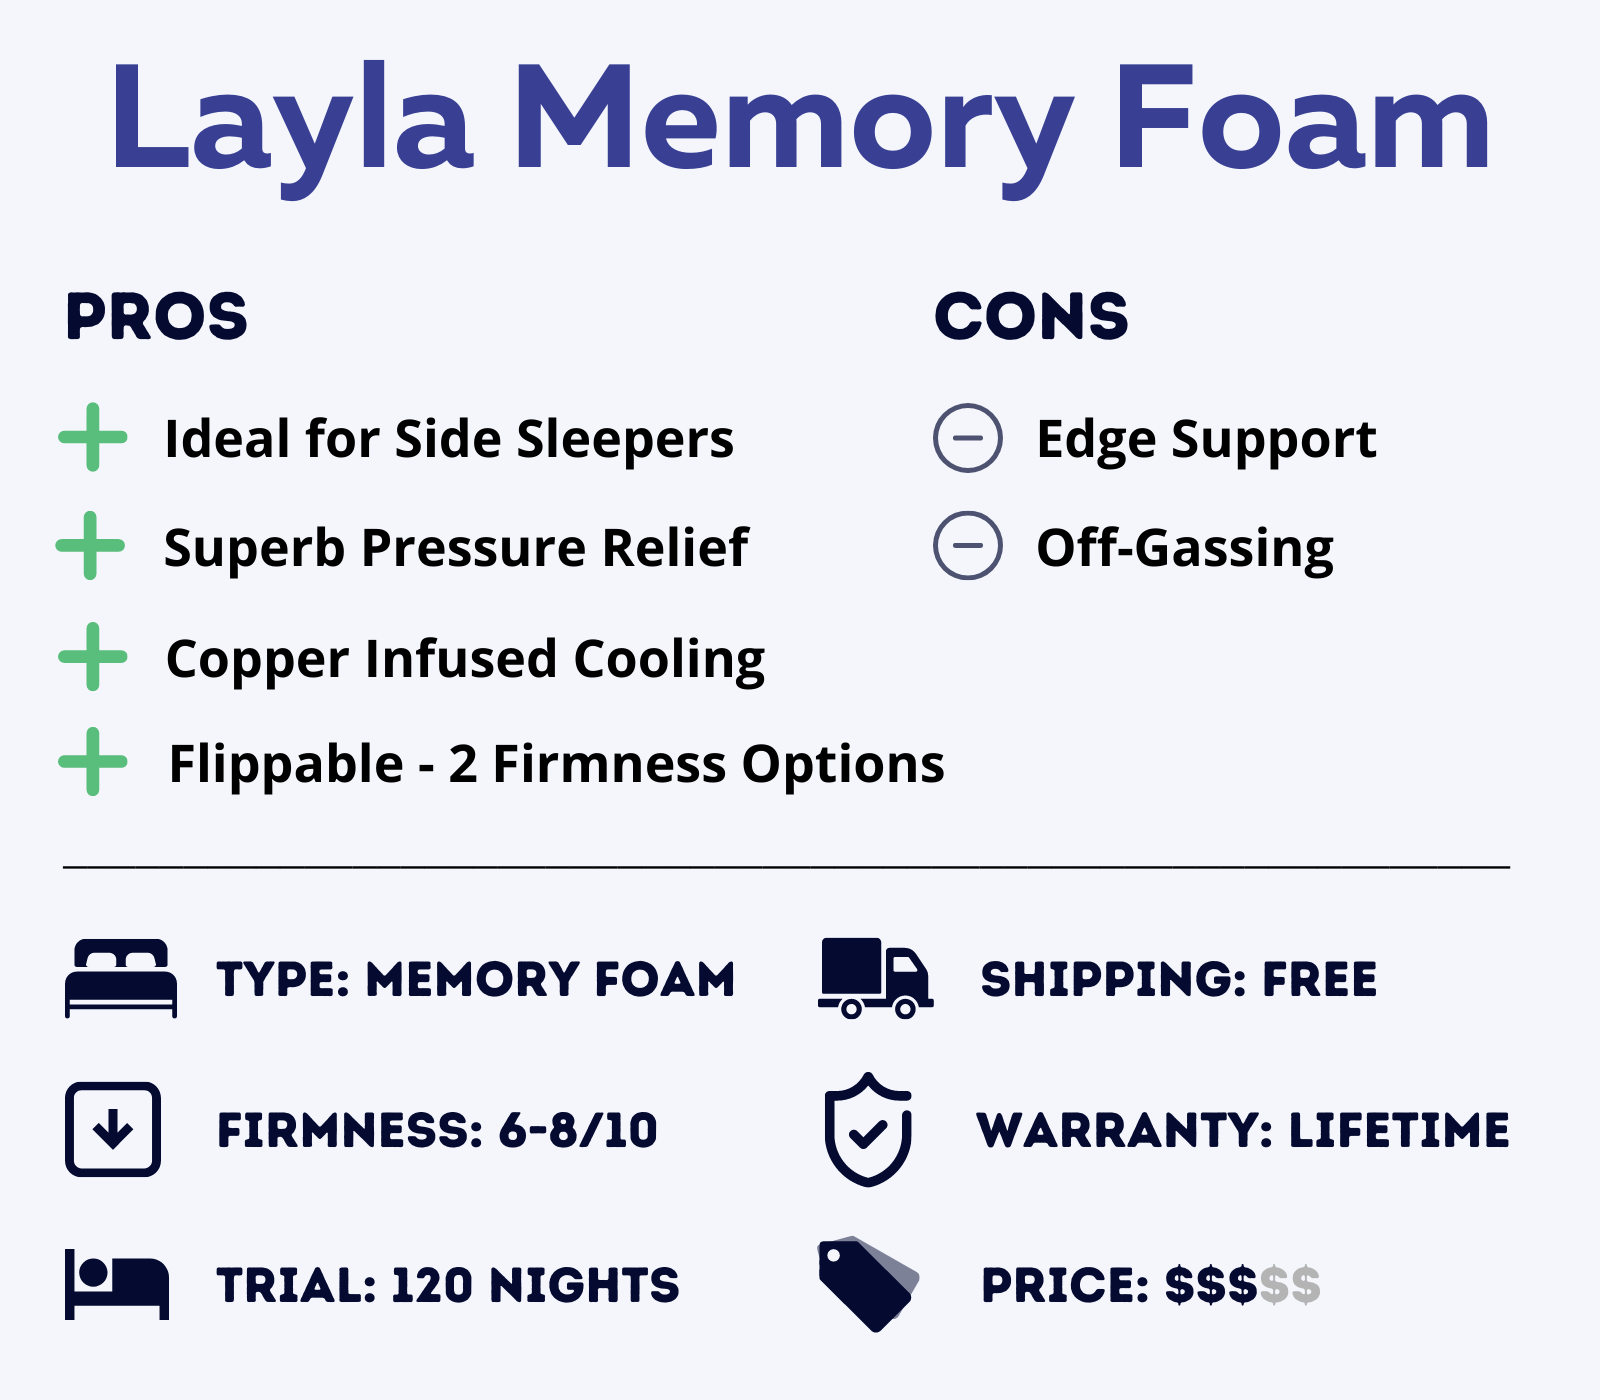 layla memory foam mattress features overview